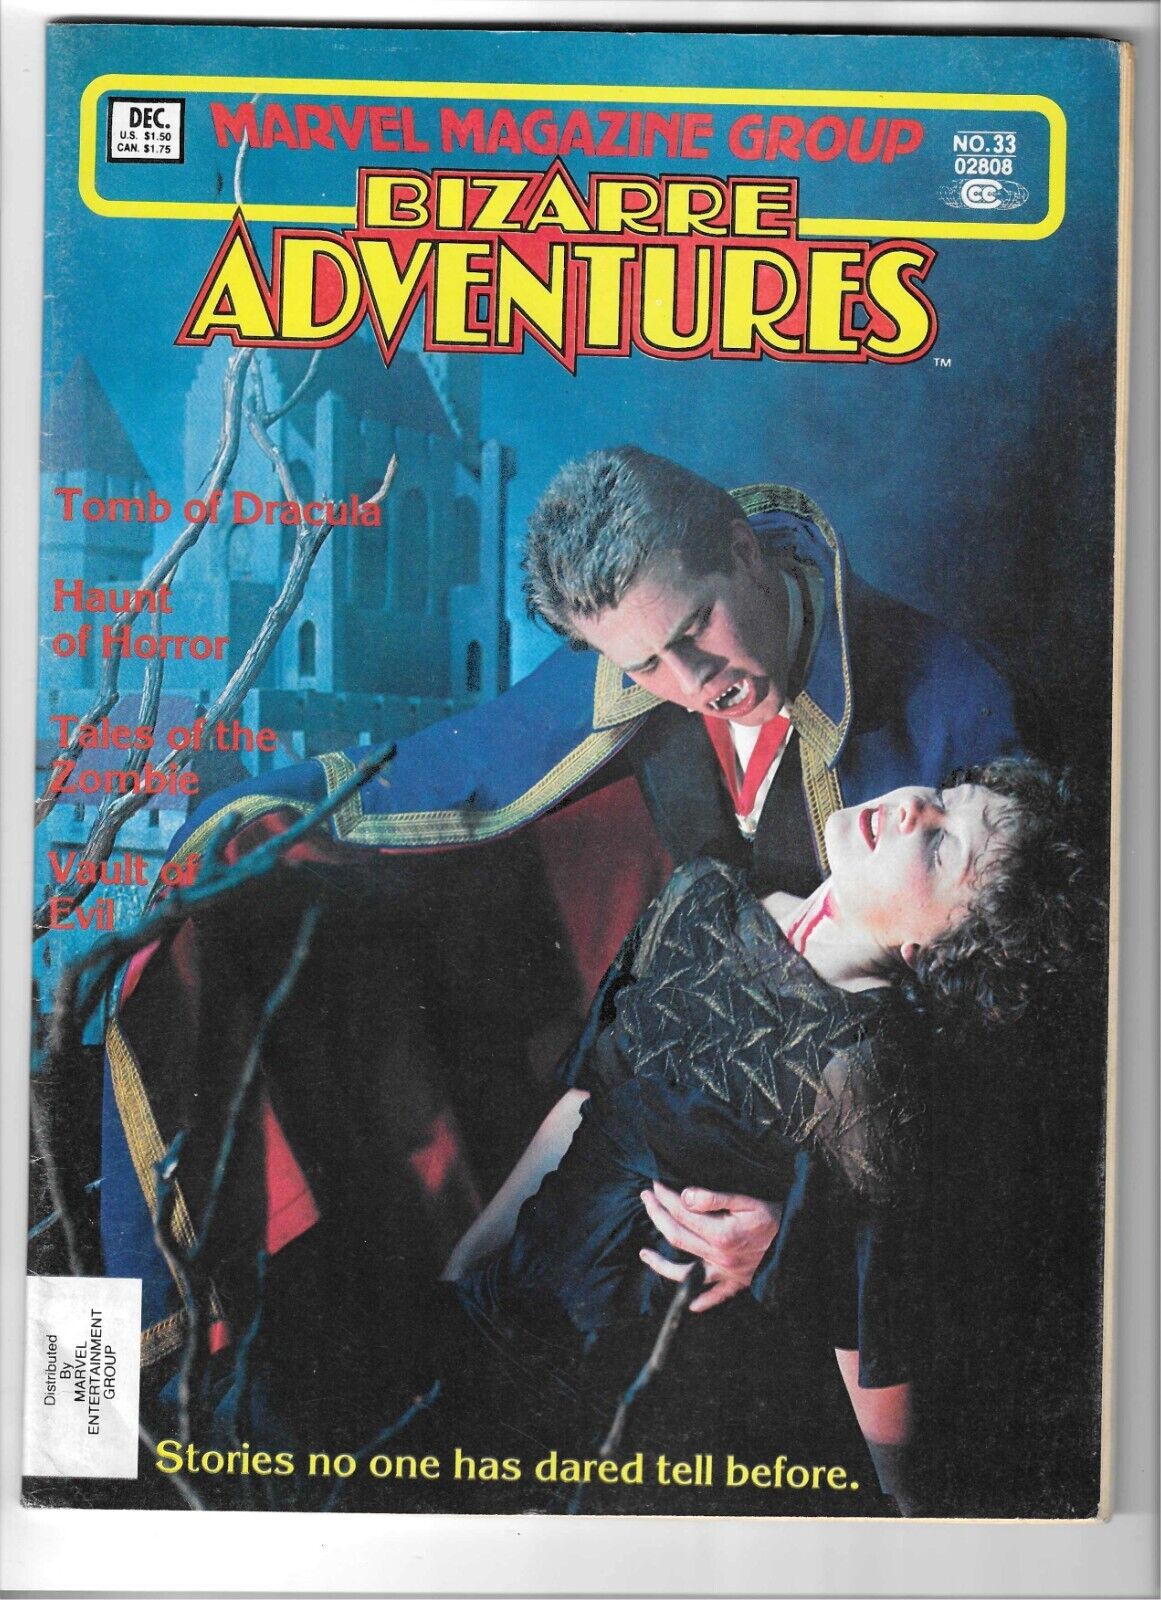 Marvel Magazine Group: Bizarre Adventures #33 (1982)  F/VF or Better